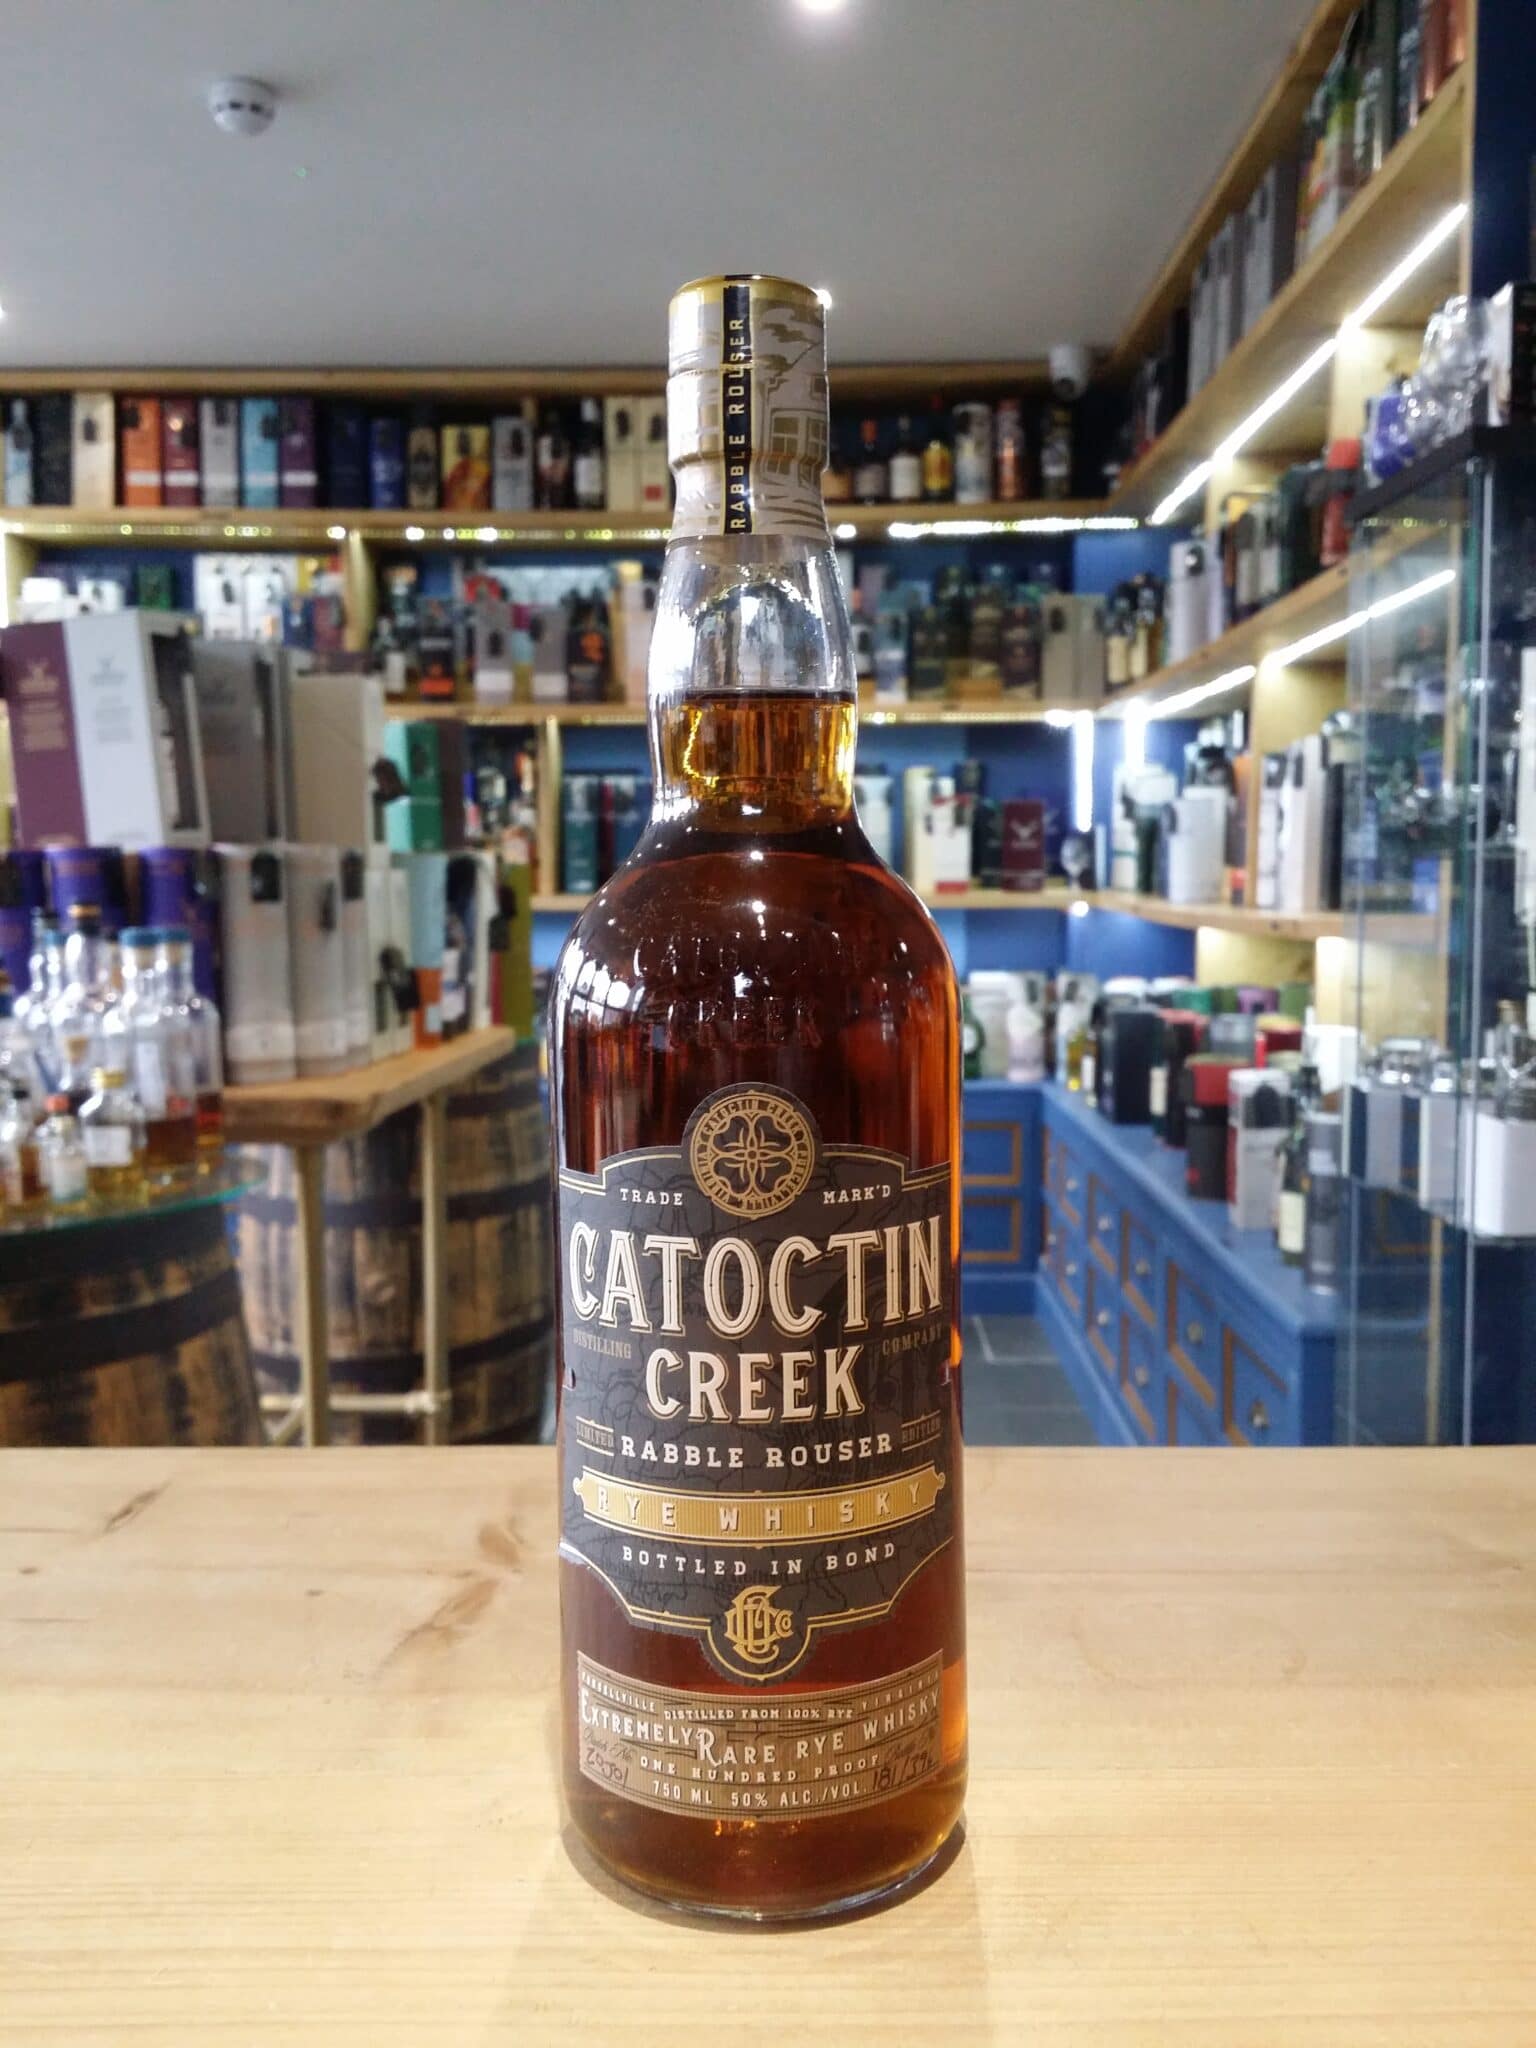 Catoctin creek Rye whisky 50%